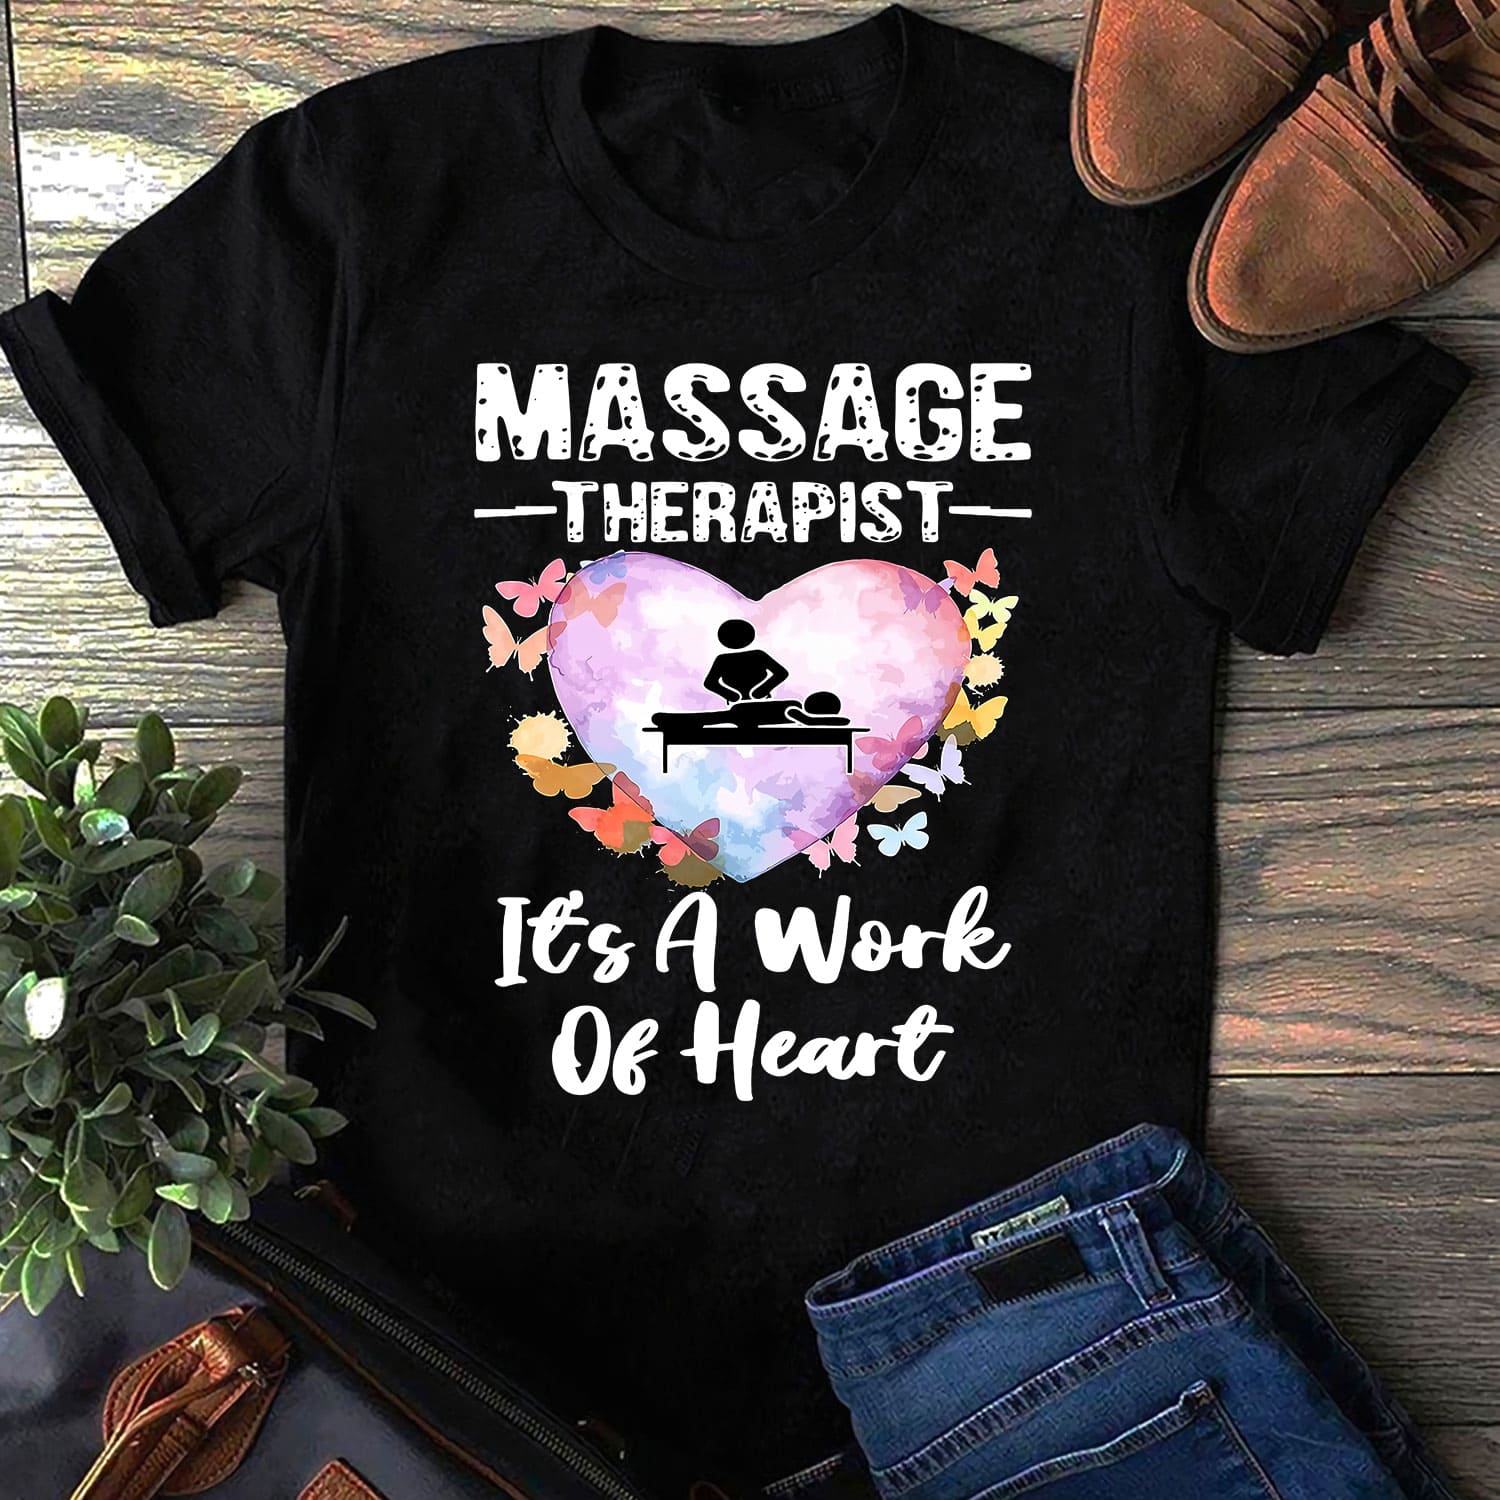 Massage therapist - A work of heart, massage therapist the job